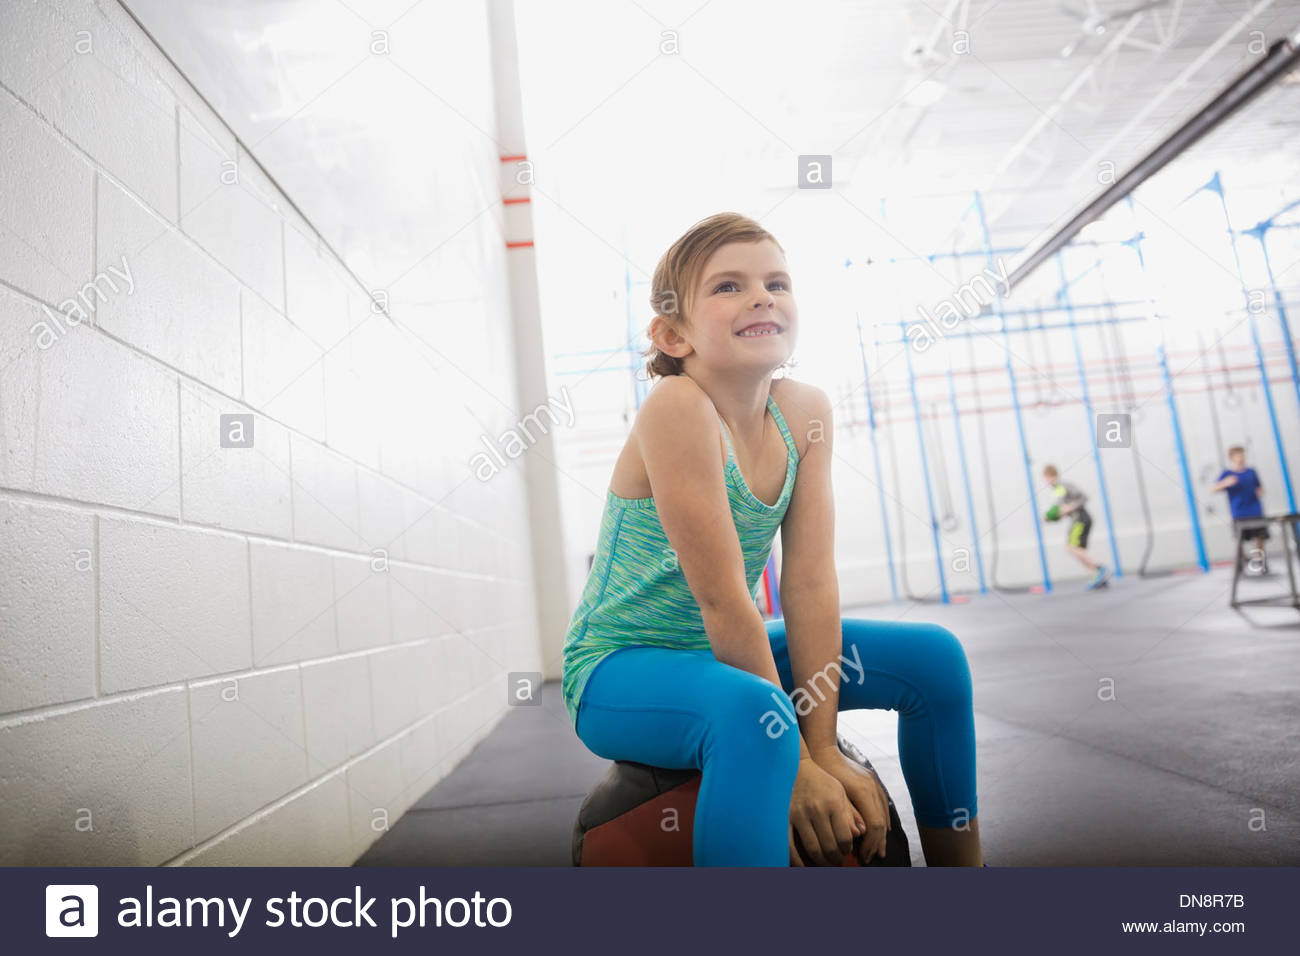 Girl sitting on medicine ball Stock Photo